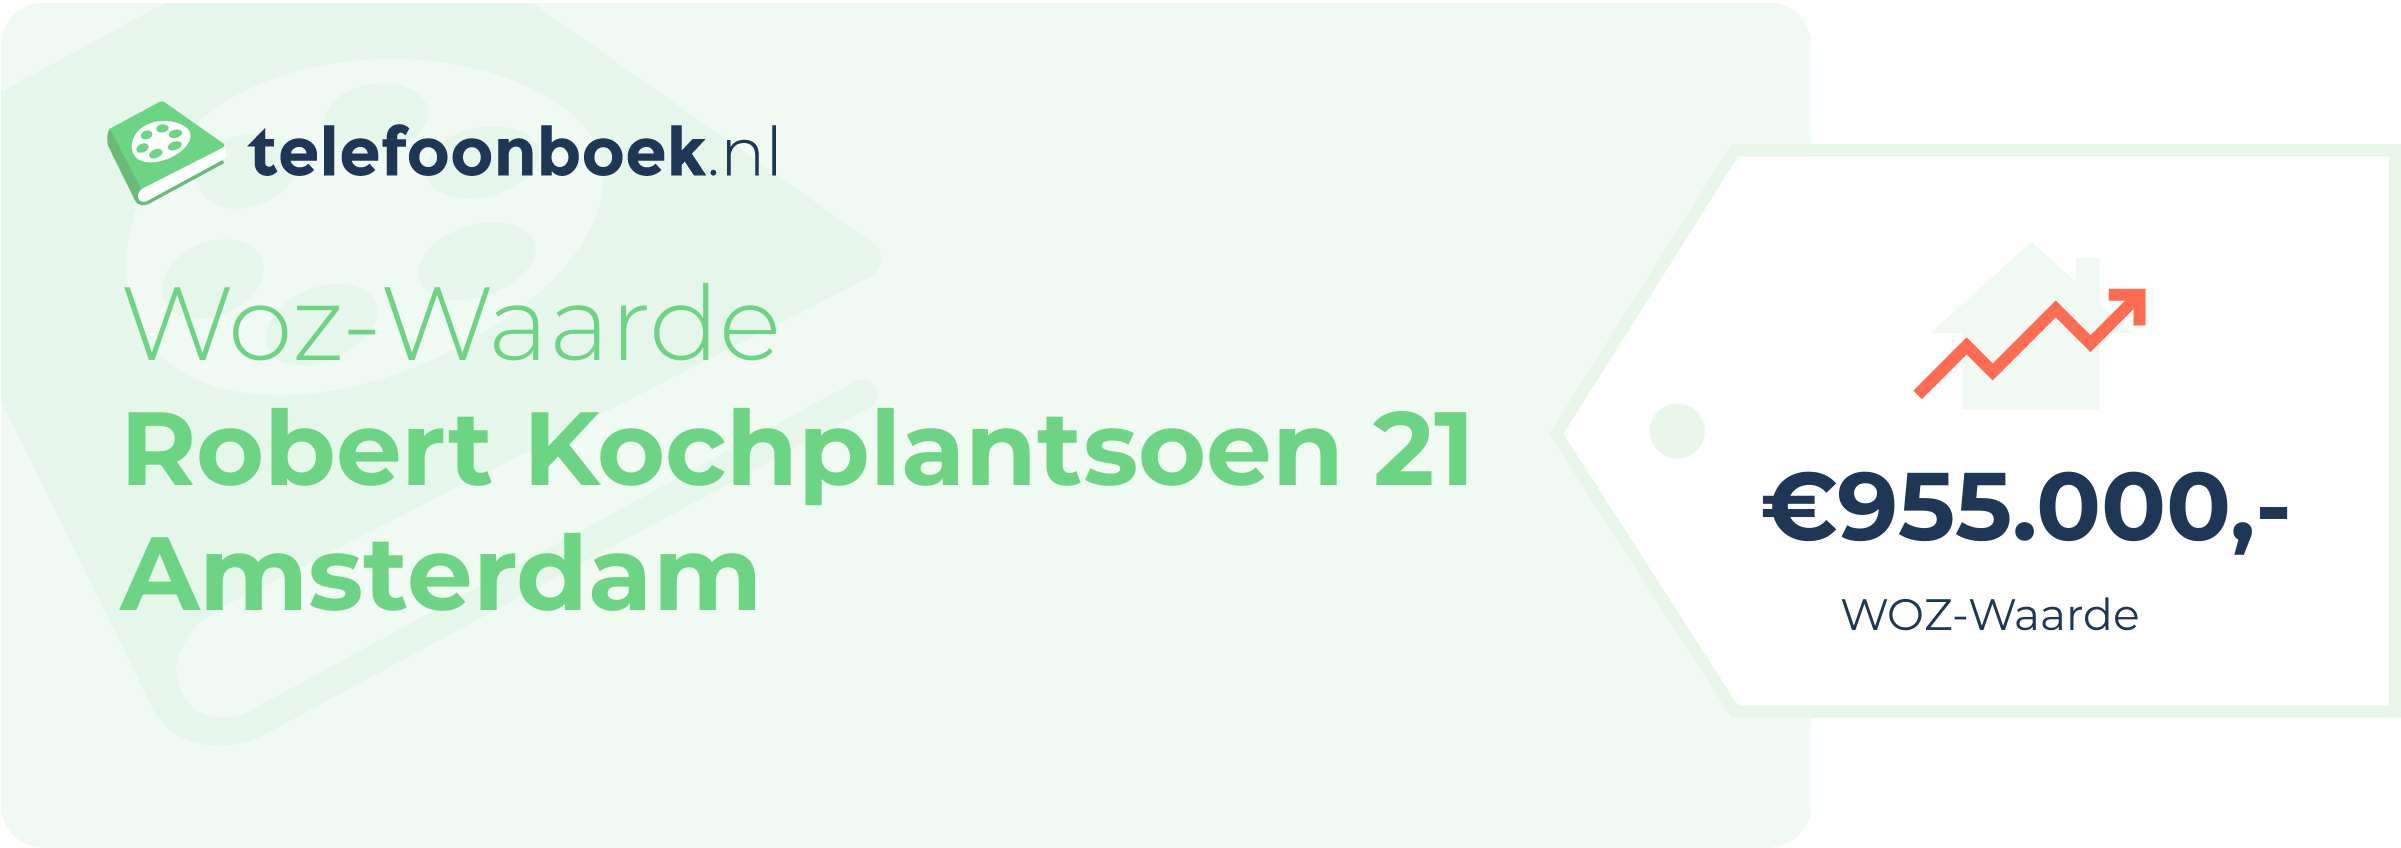 WOZ-waarde Robert Kochplantsoen 21 Amsterdam